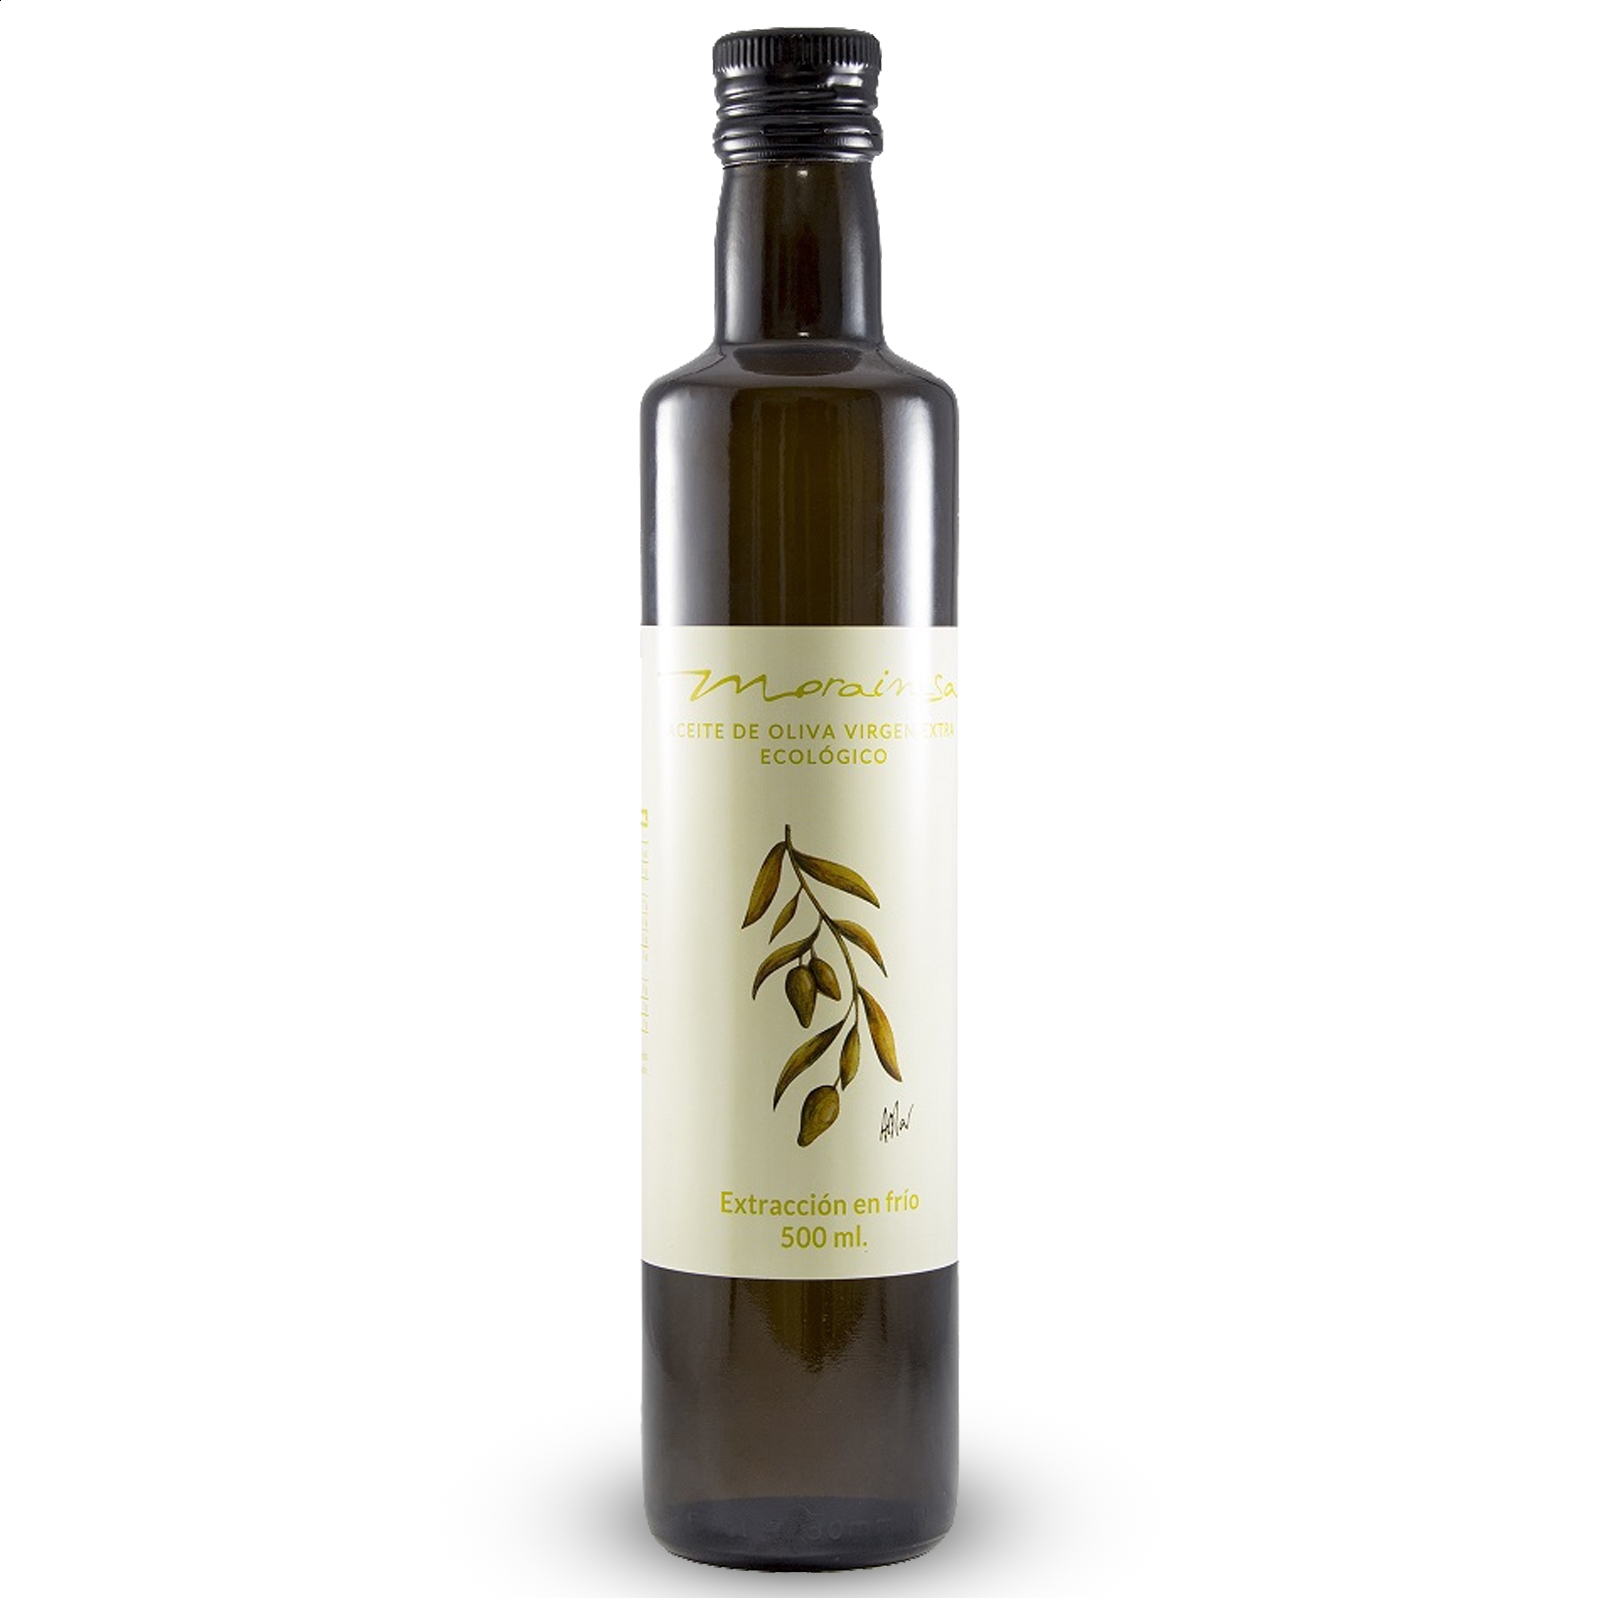 Morainsa - Aceite de oliva extra virgen ecológico 500ml, 1ud